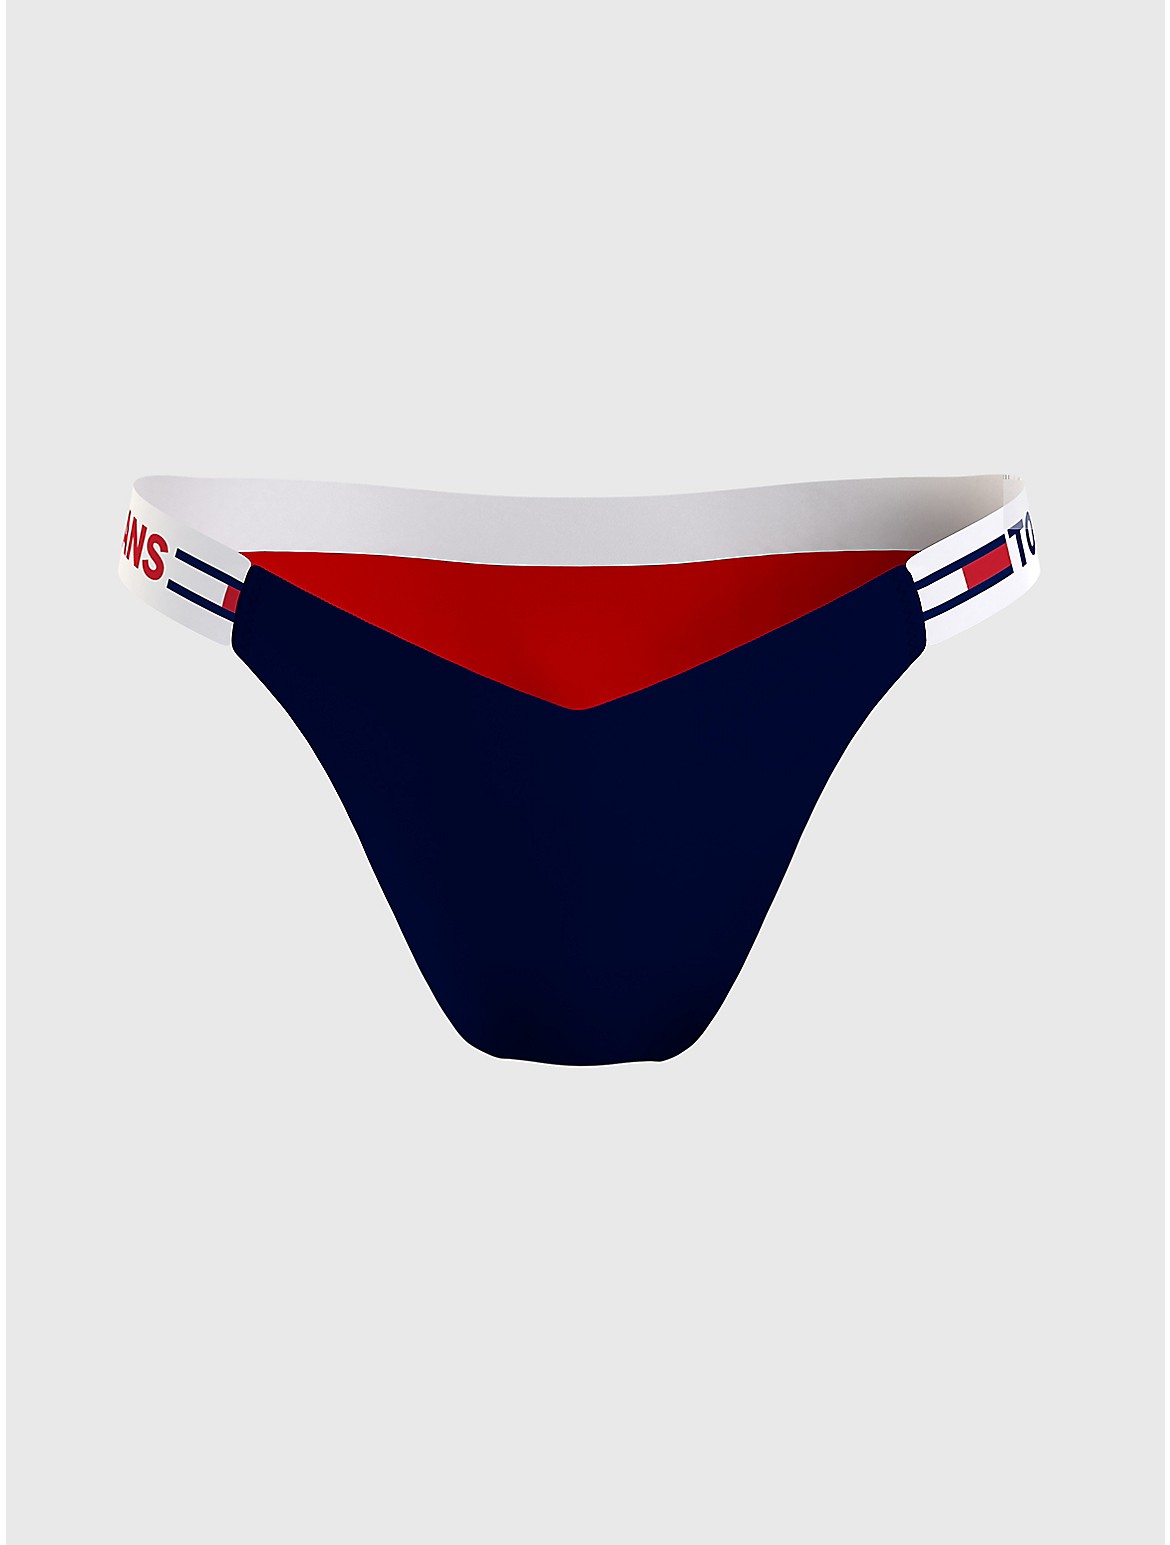 Swimsuit Tommy Hilfiger String Side Tie Cheeky Bikini Navy/ Red